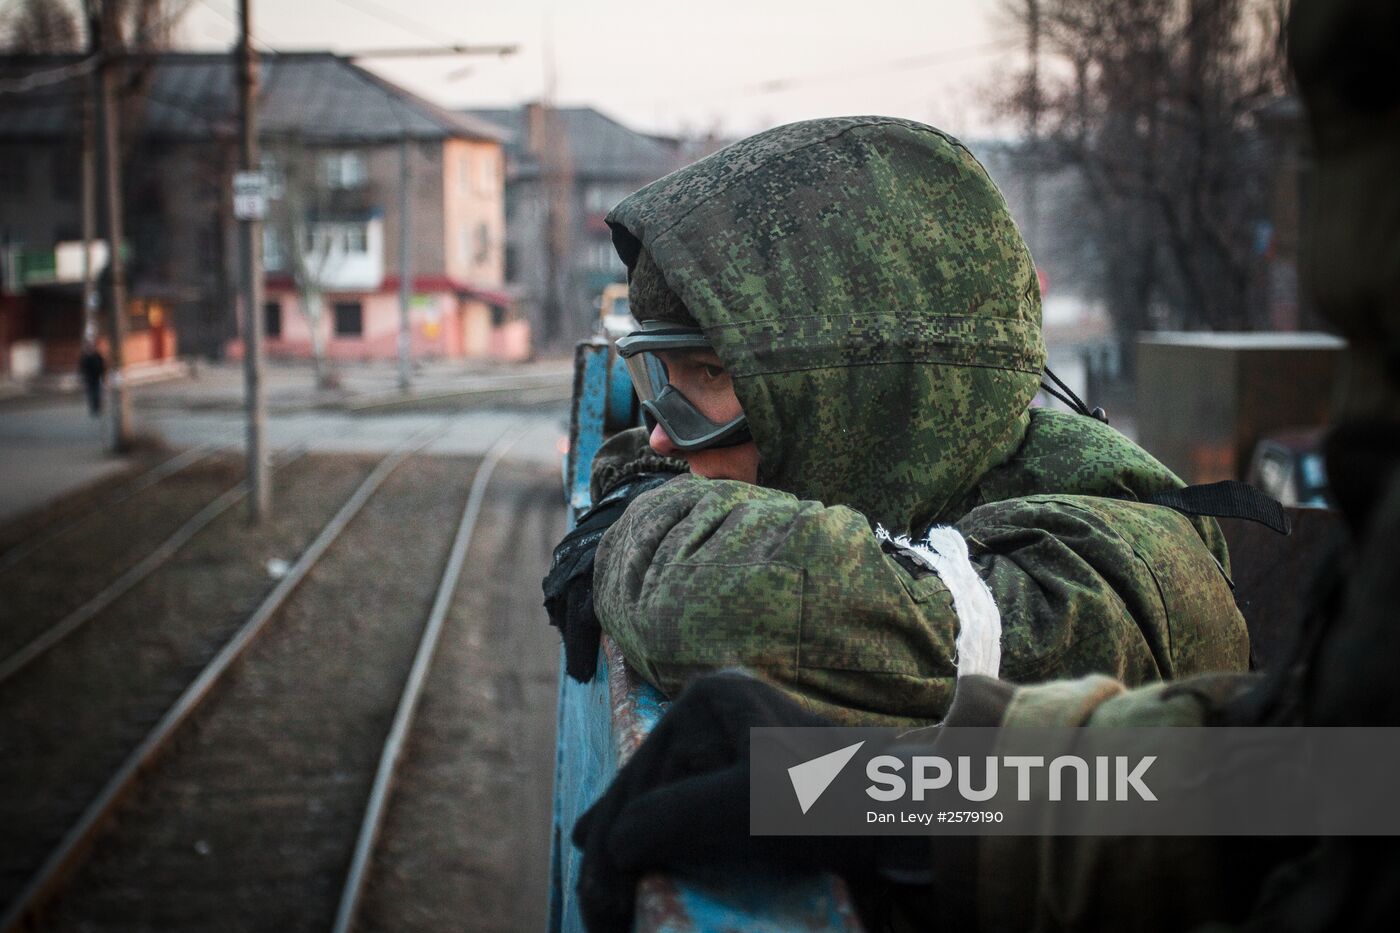 DPR self-defense fighters in Donetsk region